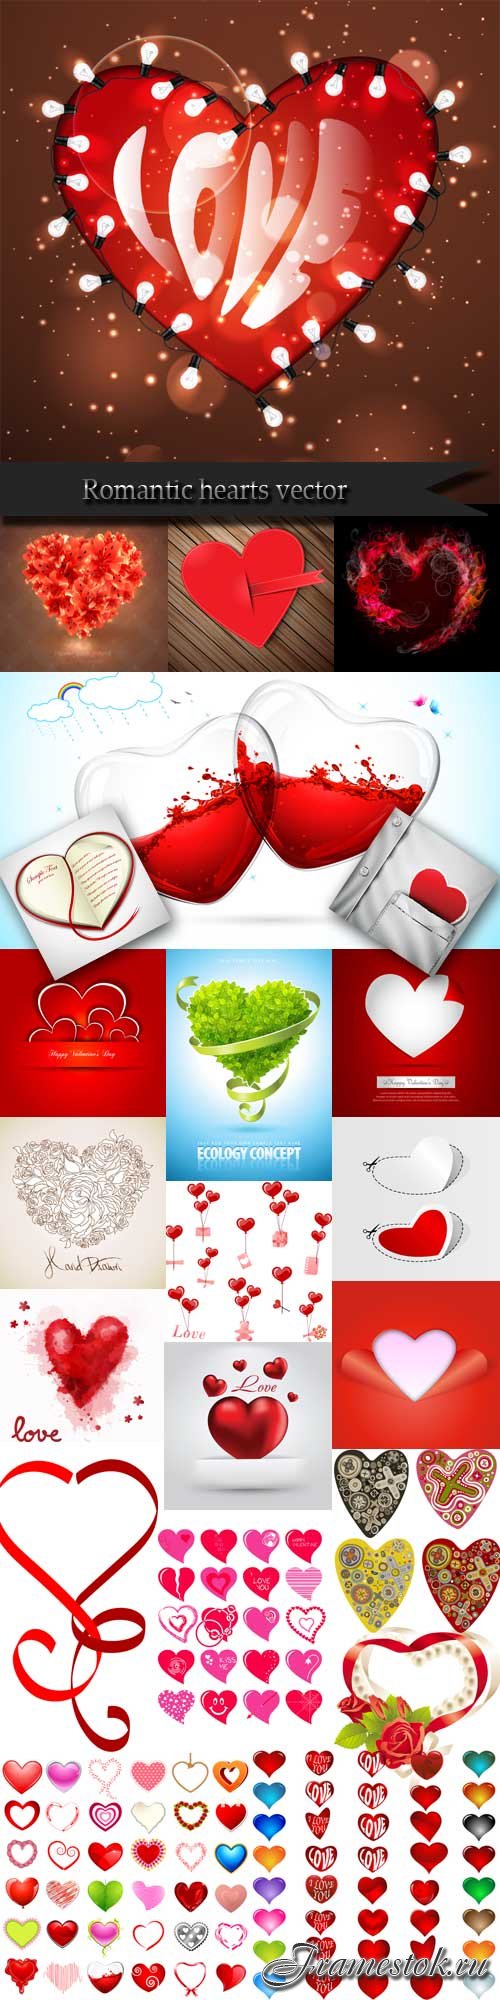 Romantic hearts vector